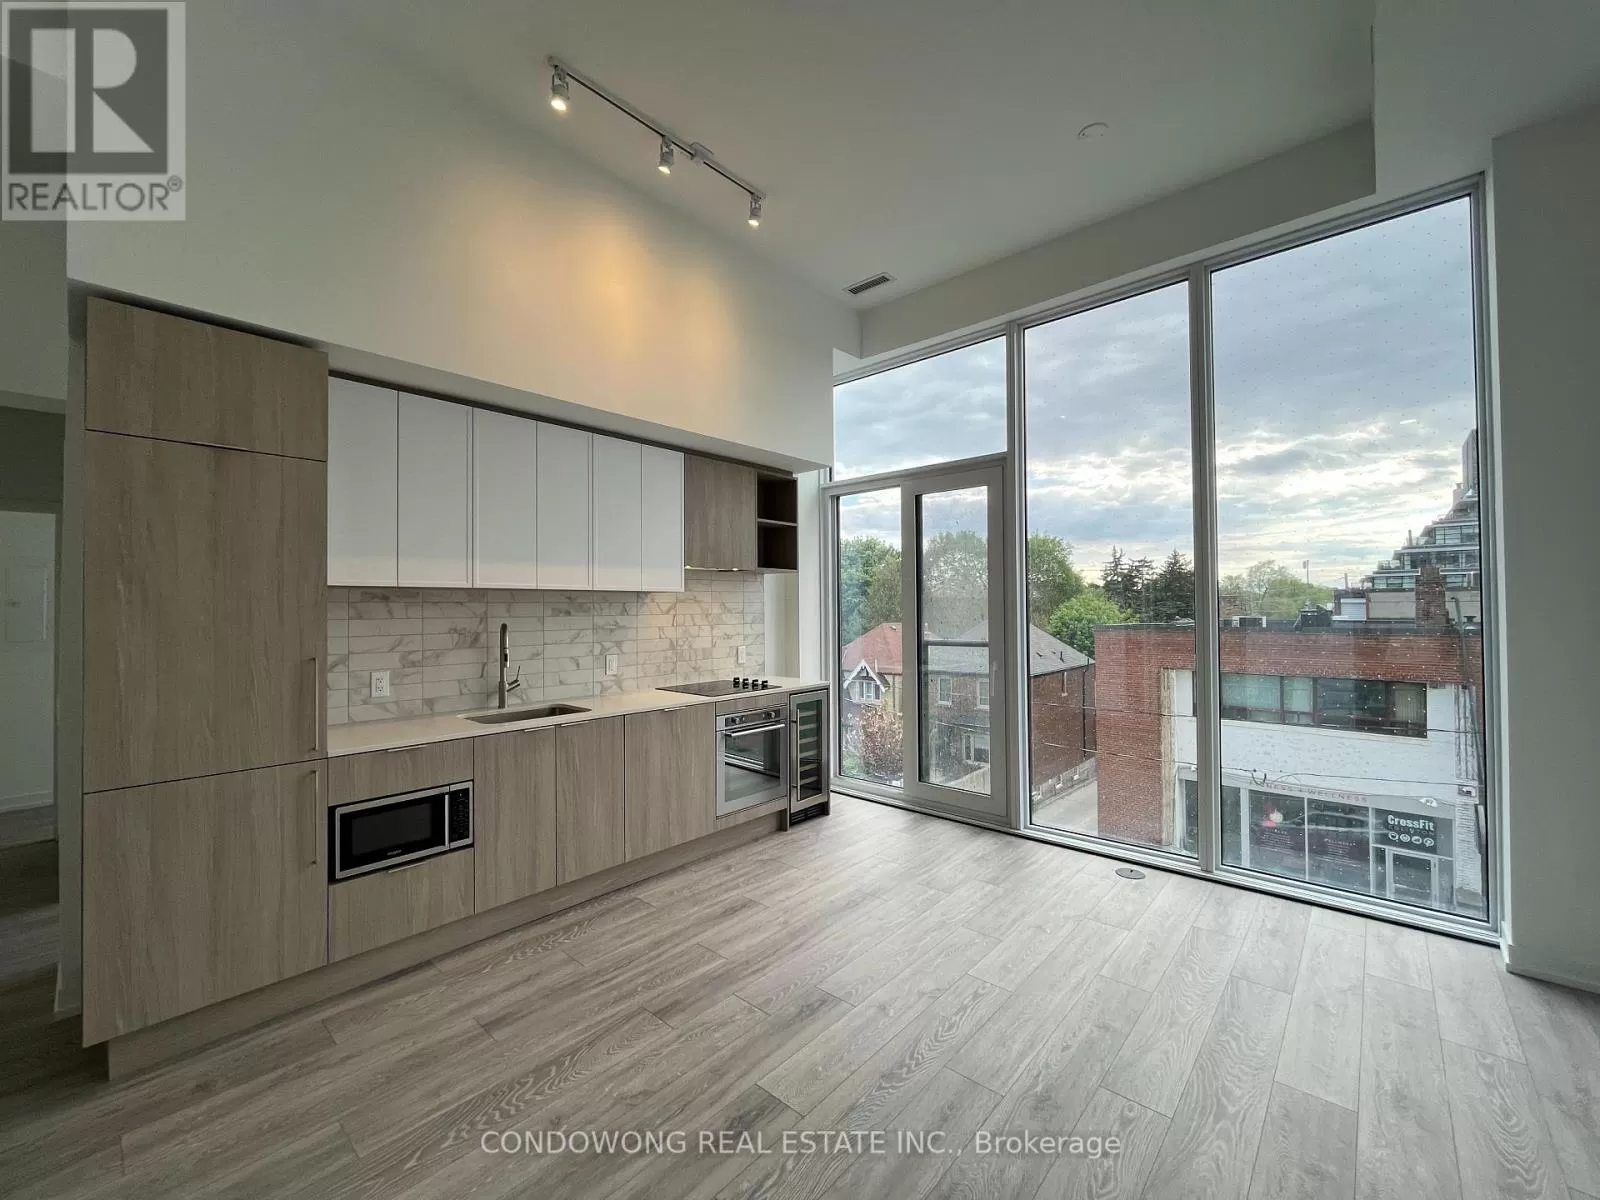 Apartment for rent: 208 - 2020 Bathurst Street, Toronto, Ontario M5P 0A6